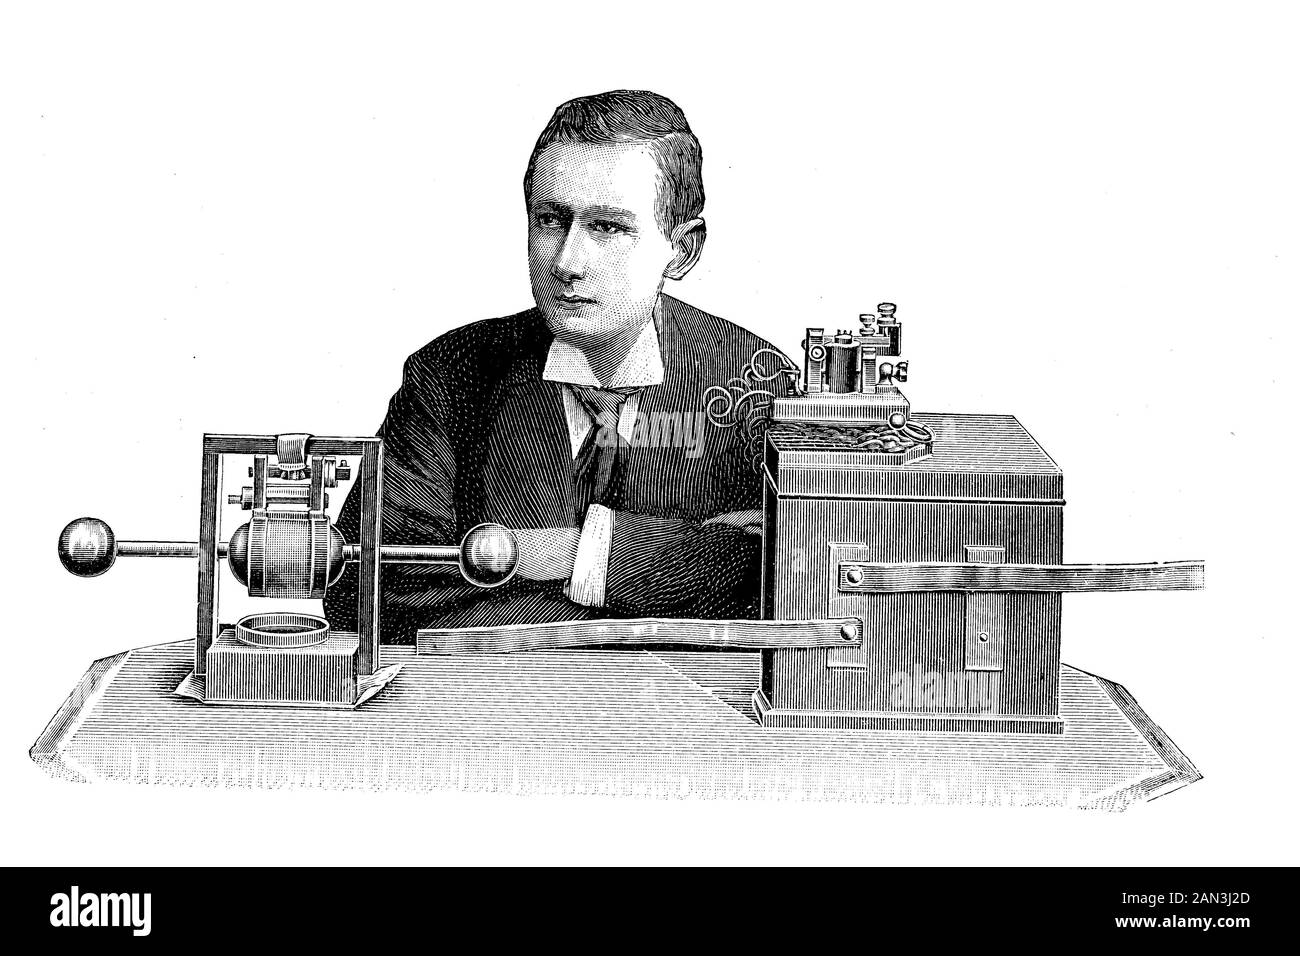 Guglielmo Marconi aparato de demostración que utilizó en sus primeras  transmisiones de radio de larga distancia en el 1890, / Guglielmo Marconi  demonstrierte Apparate, die er 1890 en seinen ersten Fernfunkübertragungen  verwendete ,